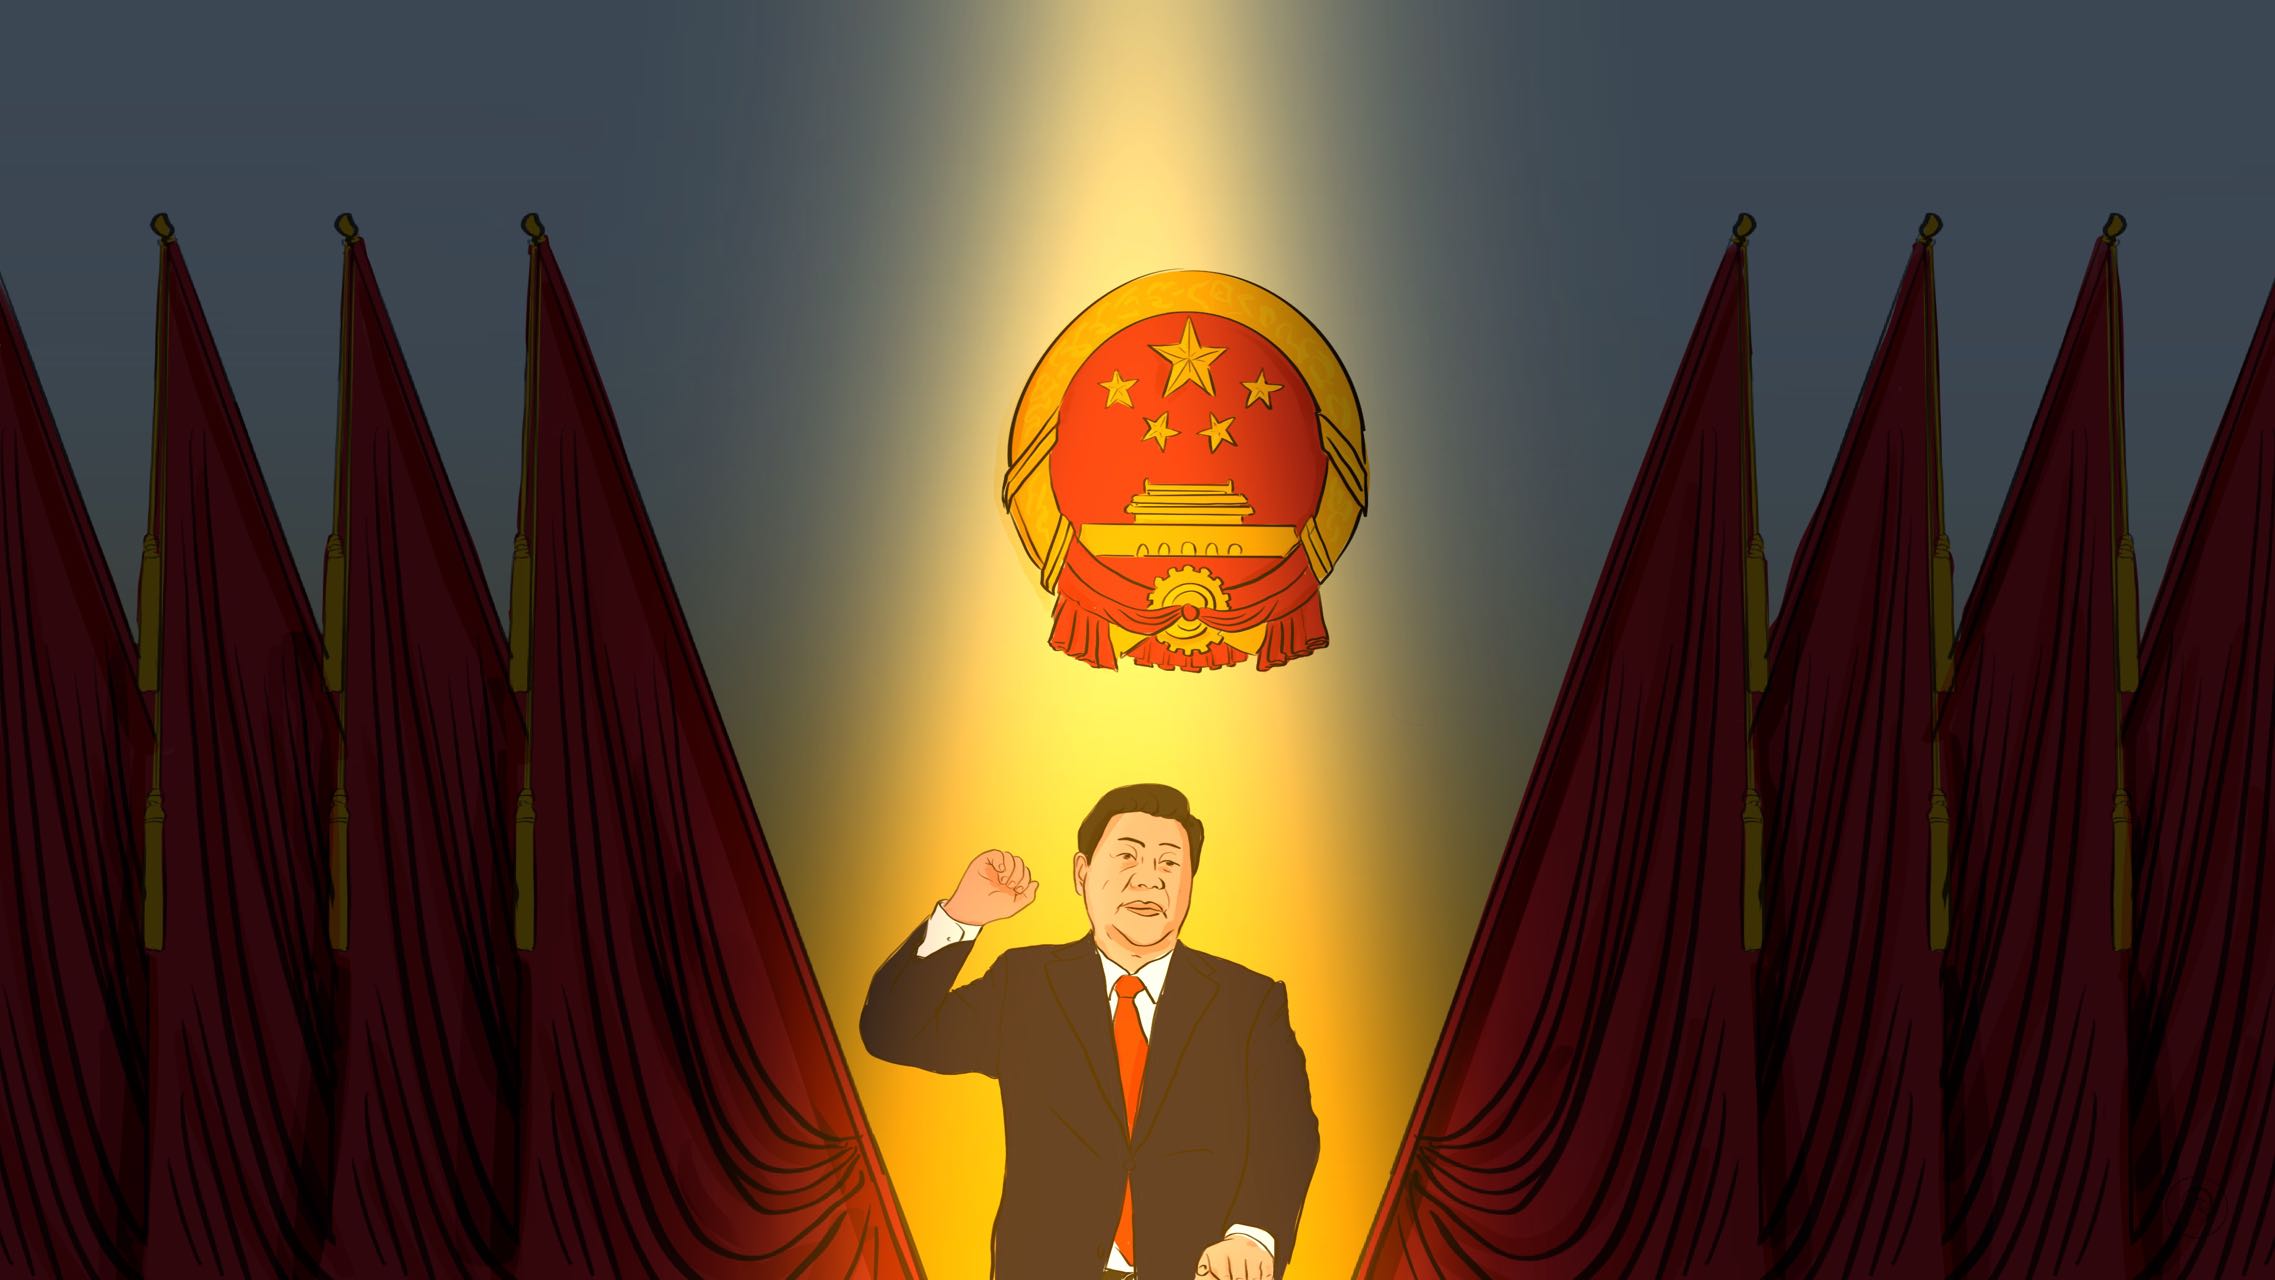 China's historic achievements under Xi's leadership